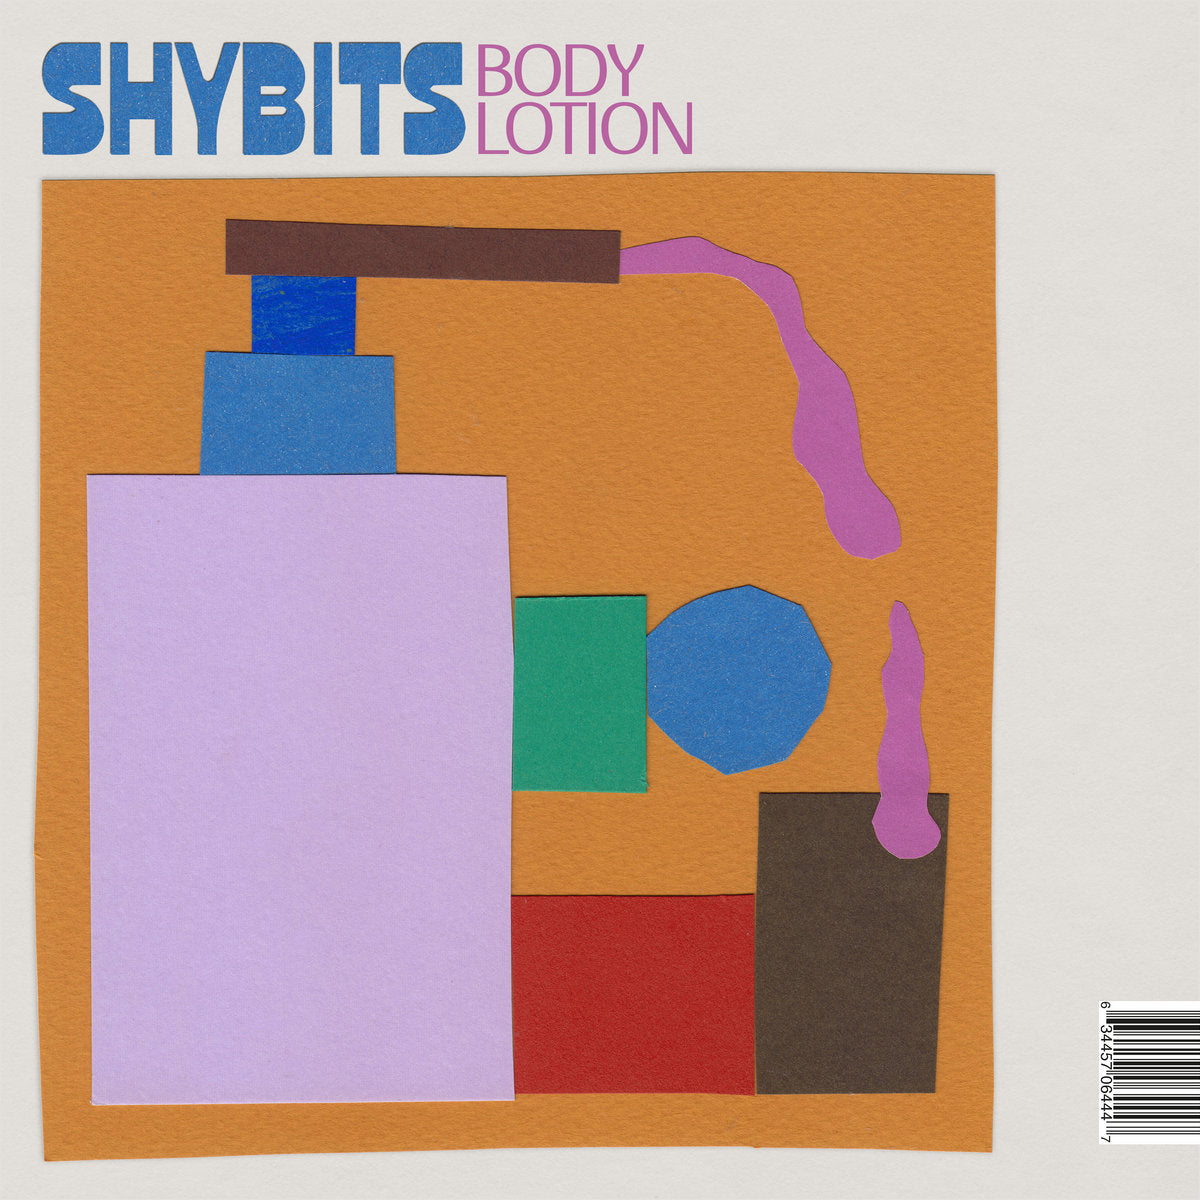 SHYBITS - BODY LOTION Vinyl LP